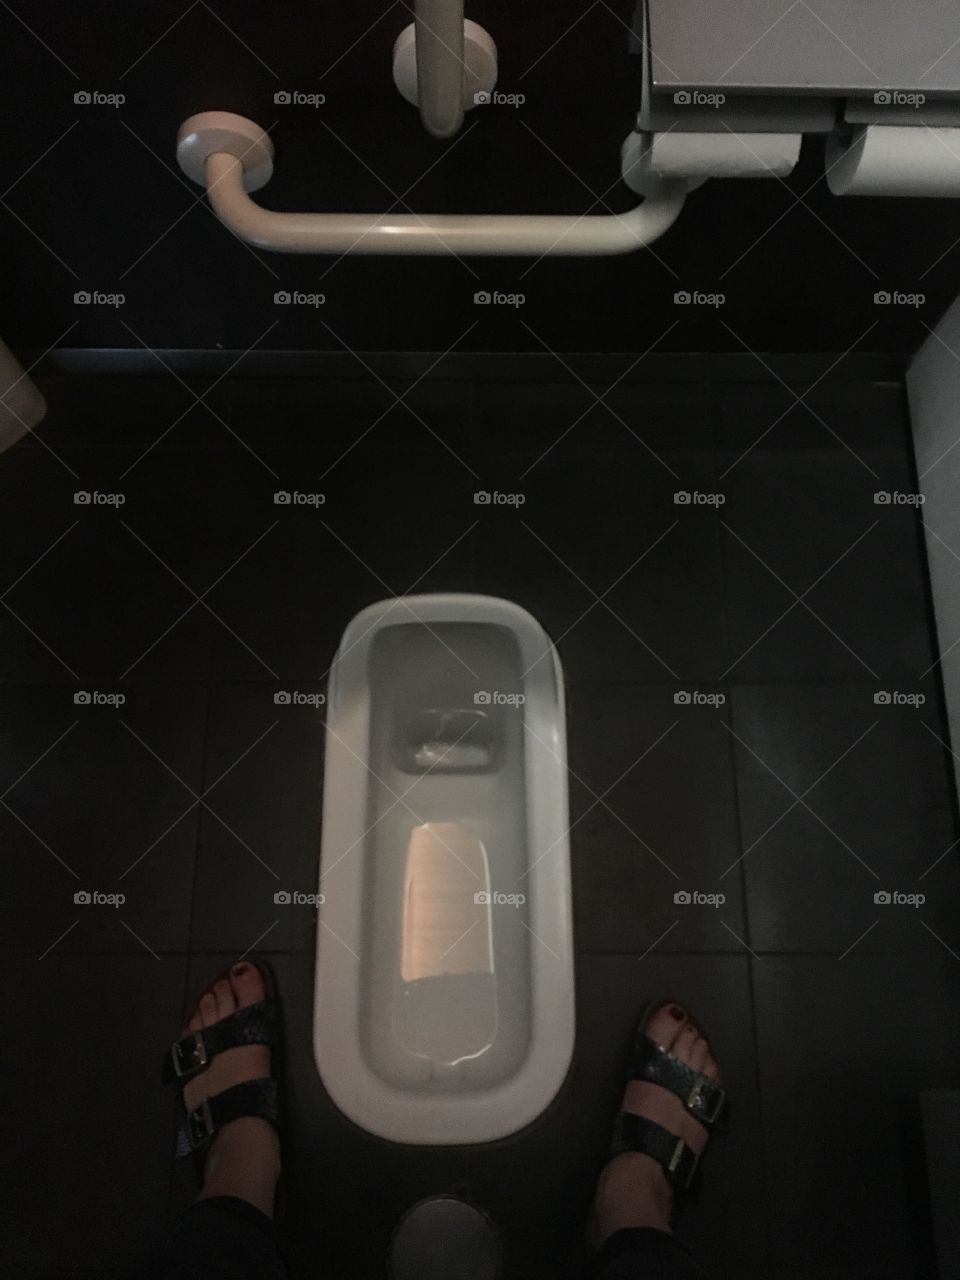 Squatty potty in Japan train station 